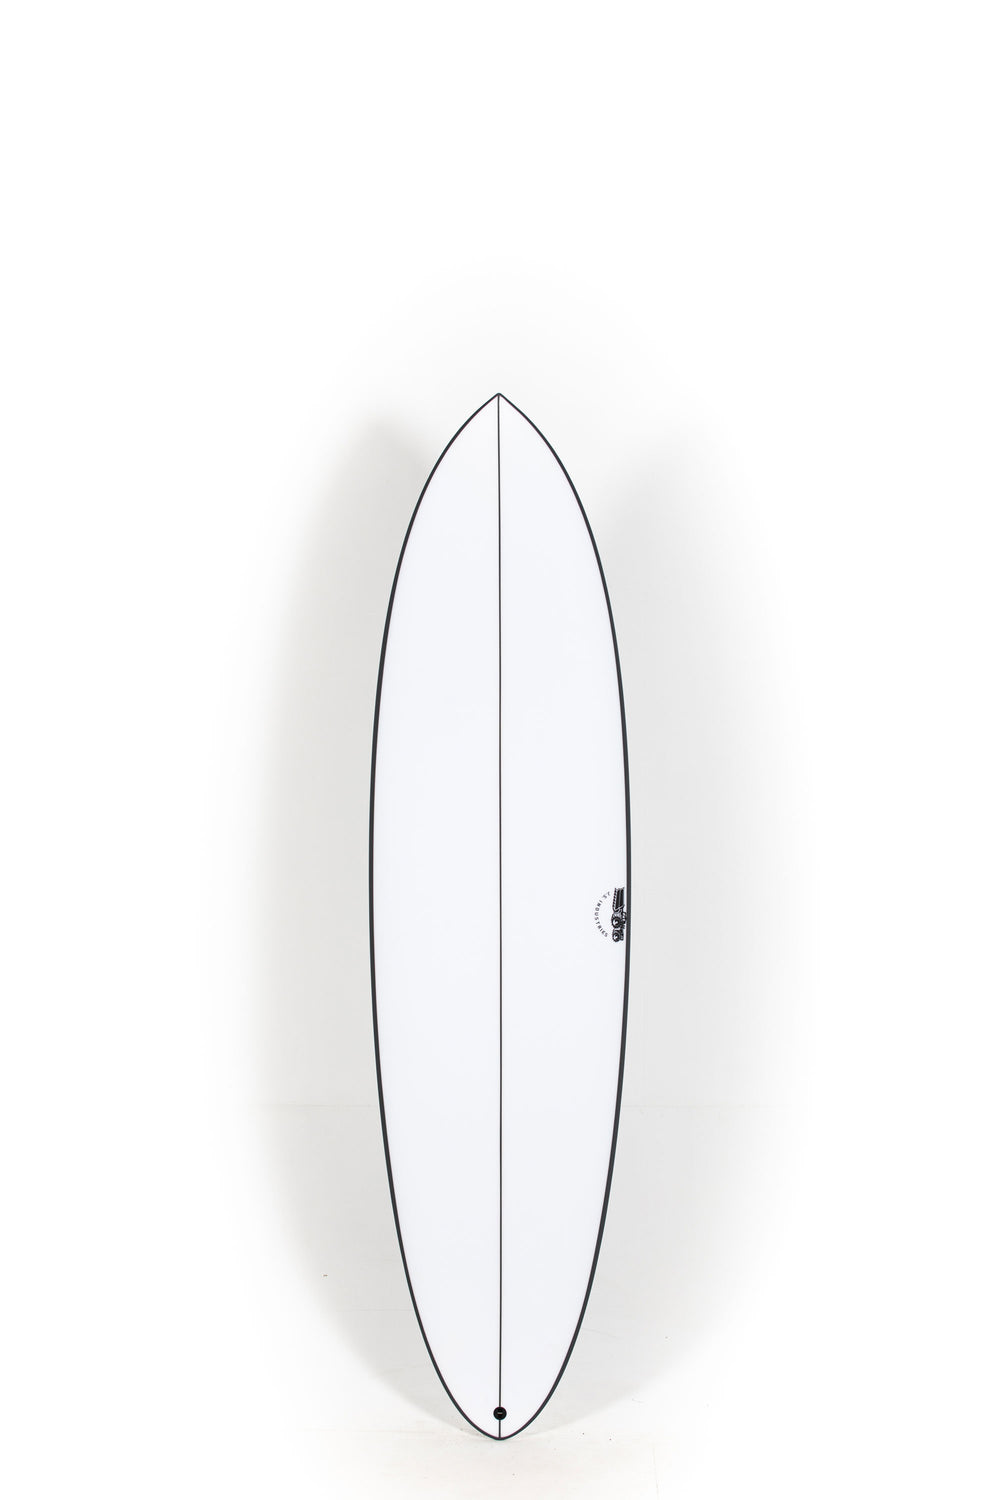 Pukas Surf Shop - JS Surfboards - EL BARON - 6'10